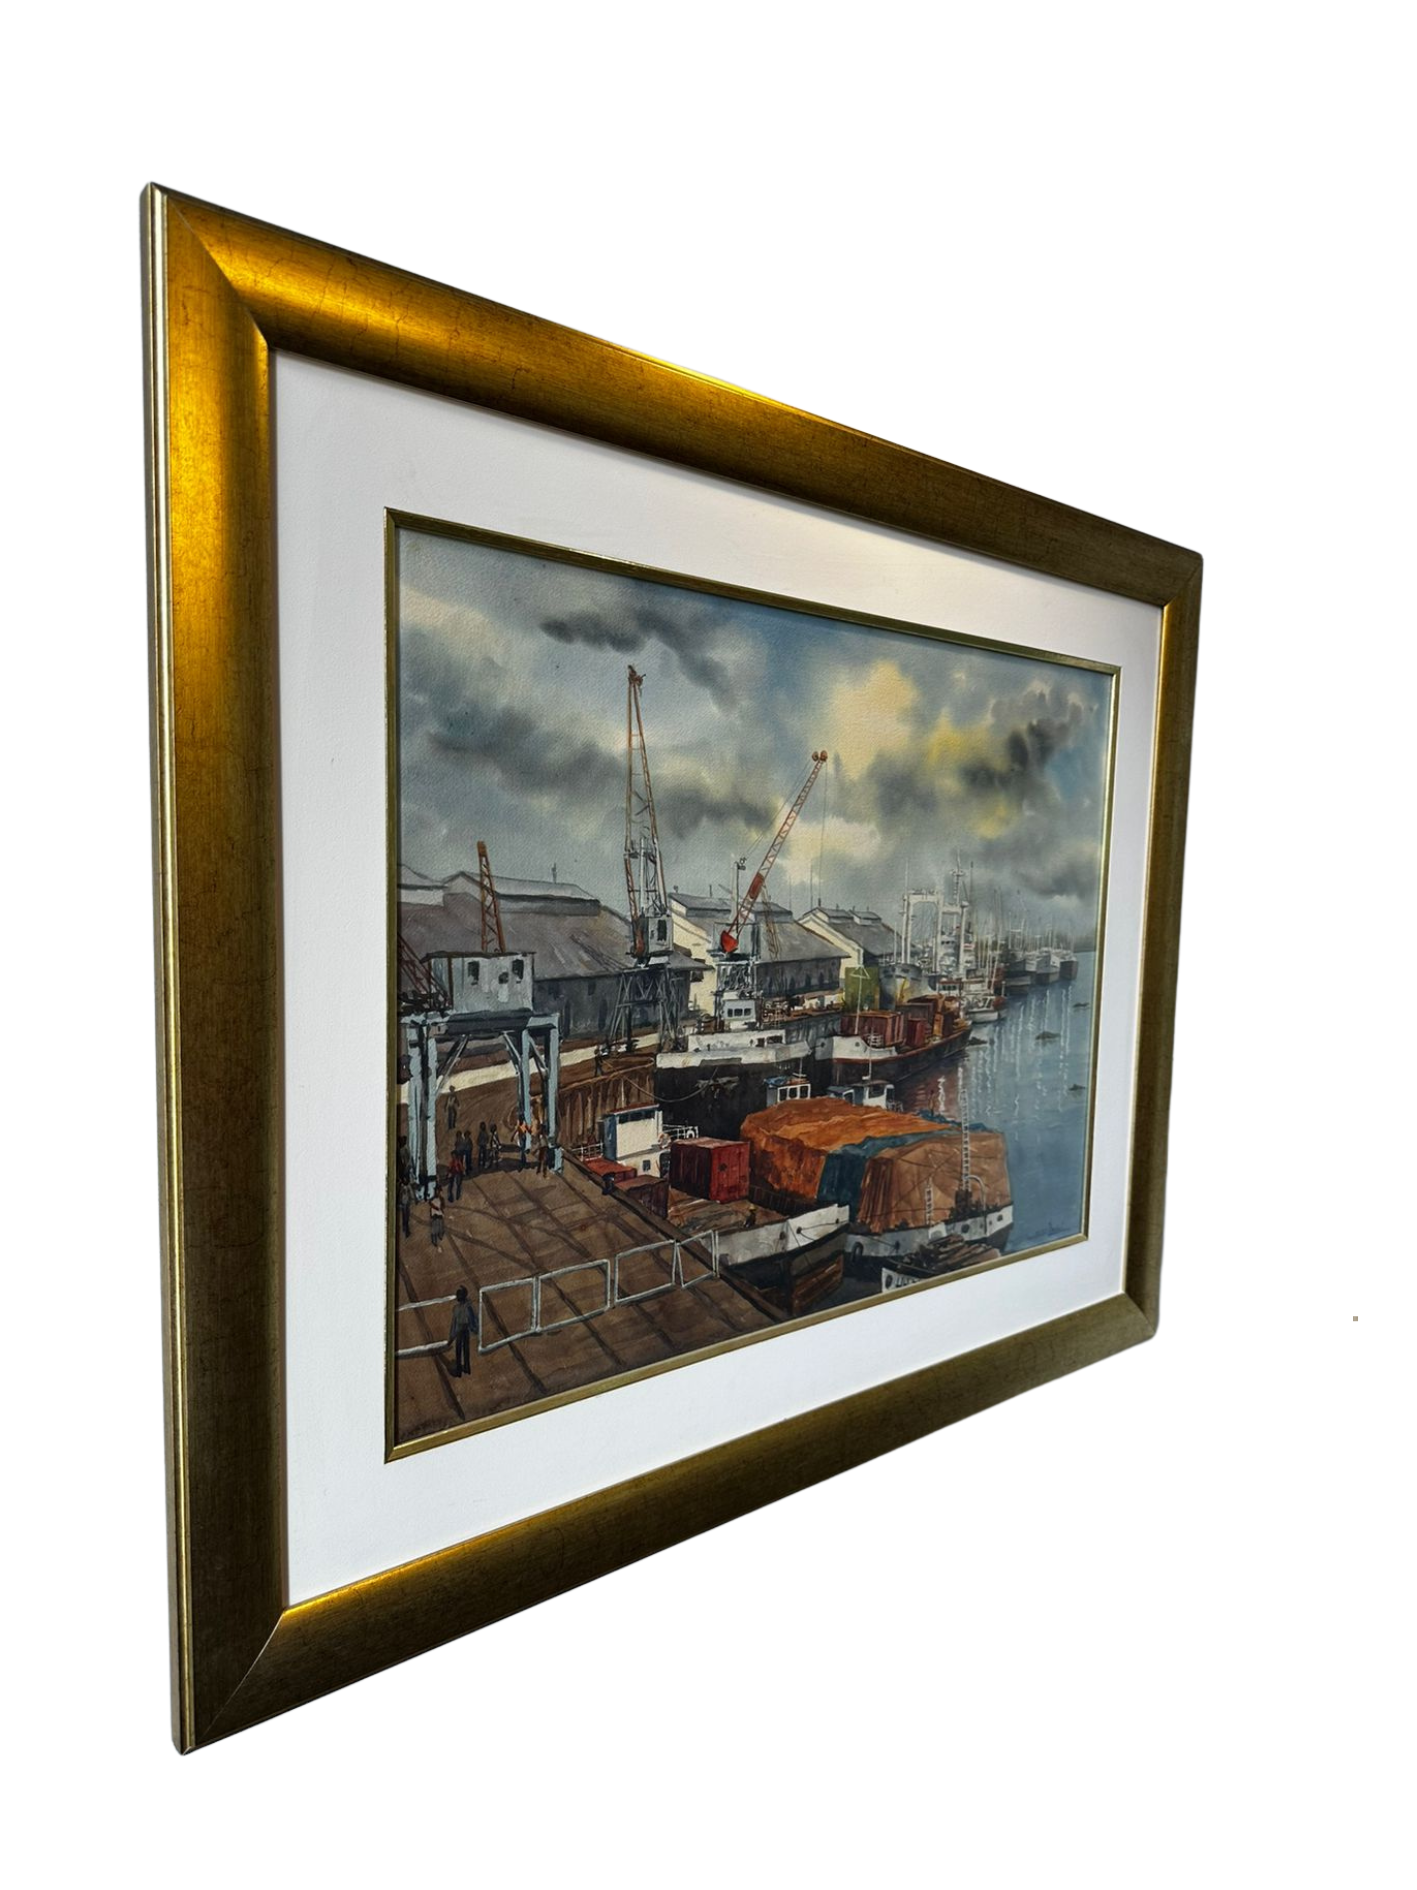 Cuadro "El Puerto" de Emilli Aparici 72 x 53 cm